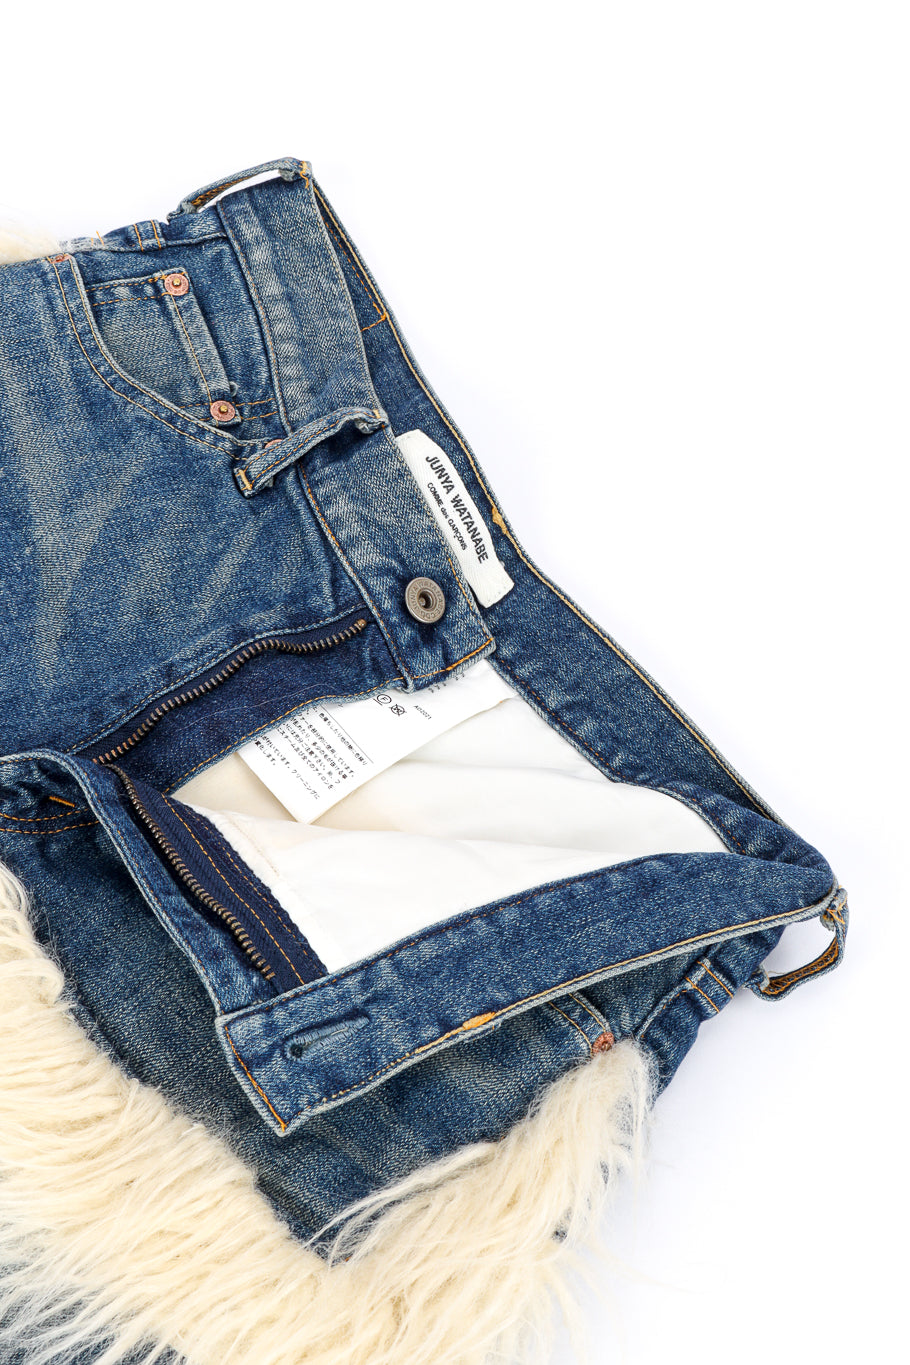 Junya Watanabe Denim Faux Fur Skirt front unzipped @recessla